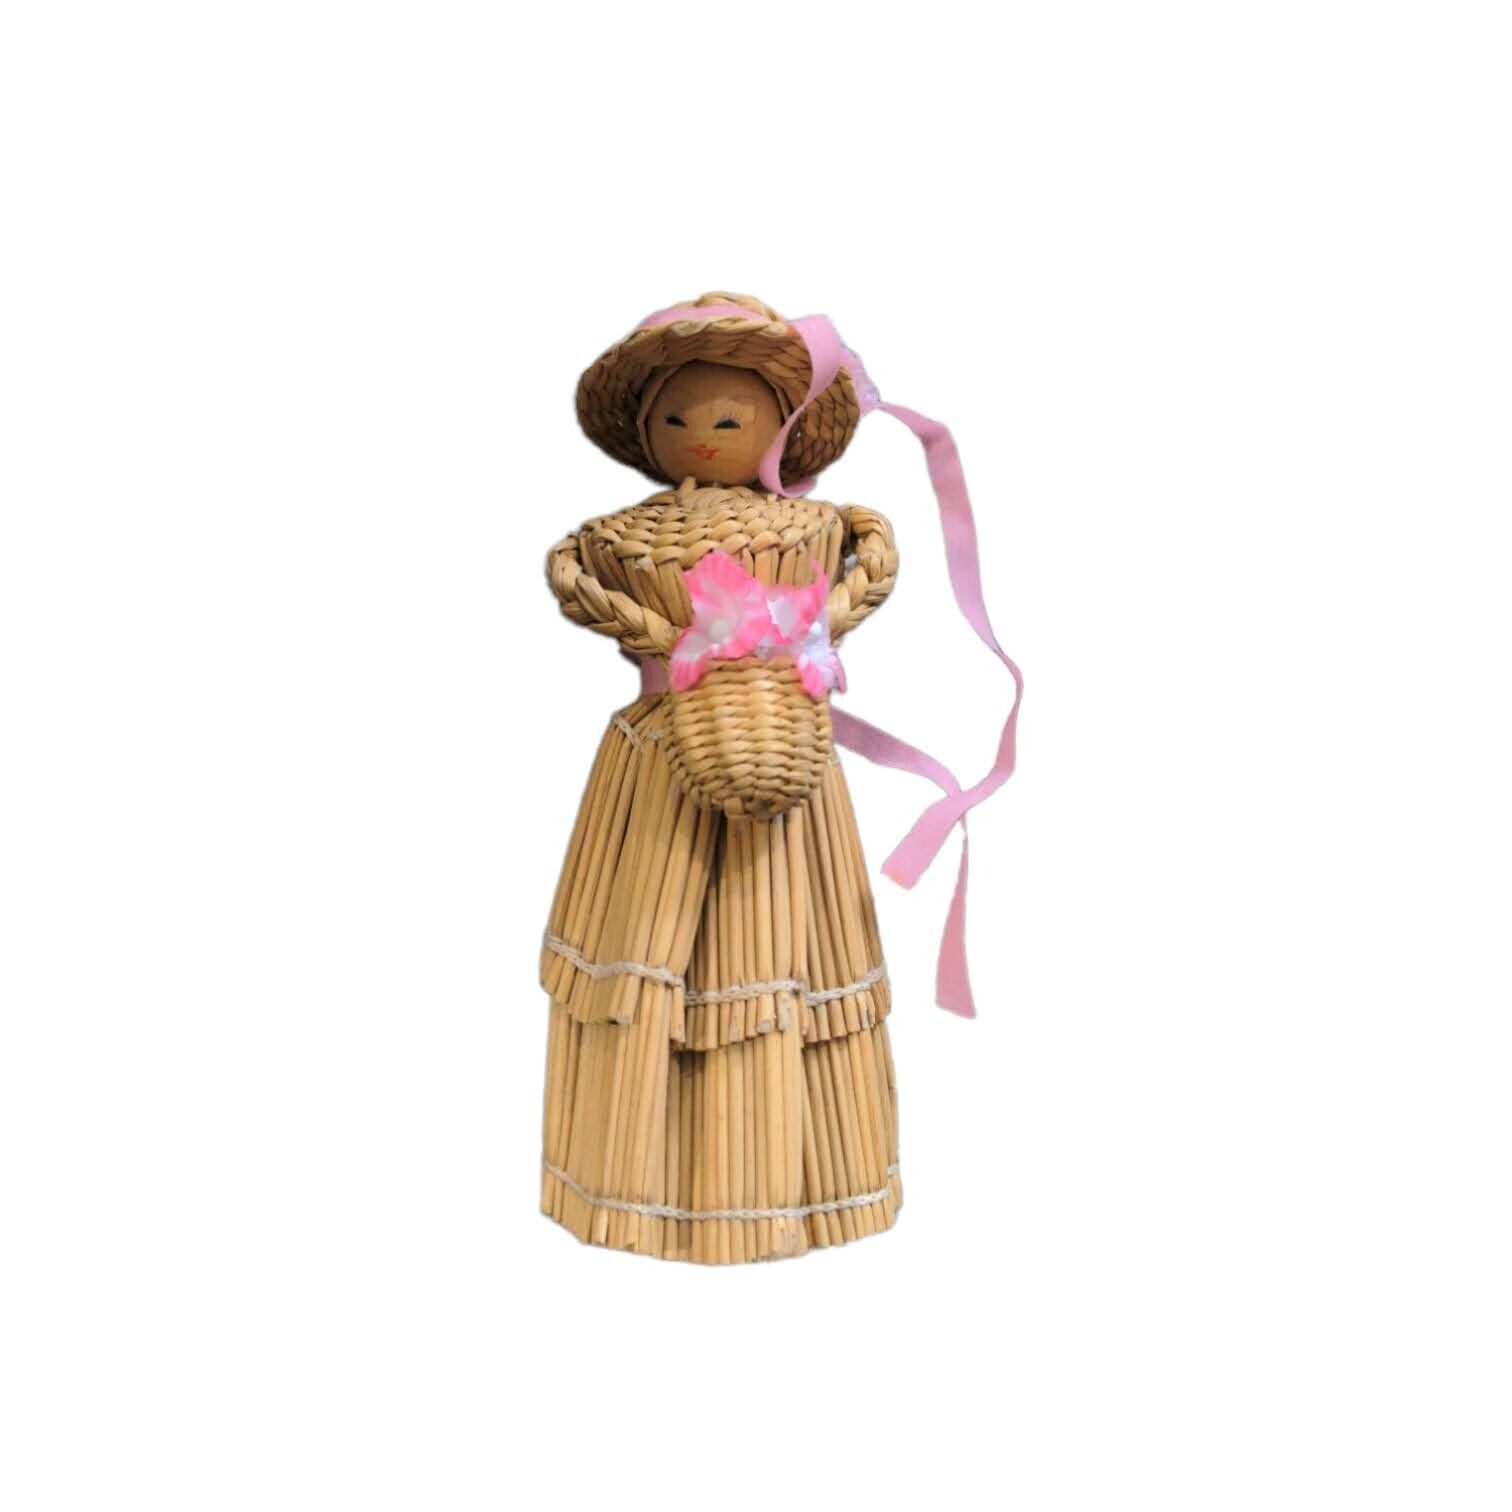 Vintage Japanese Handmade Straw Kokeshi Woman Doll Woven Pink Flower Braided